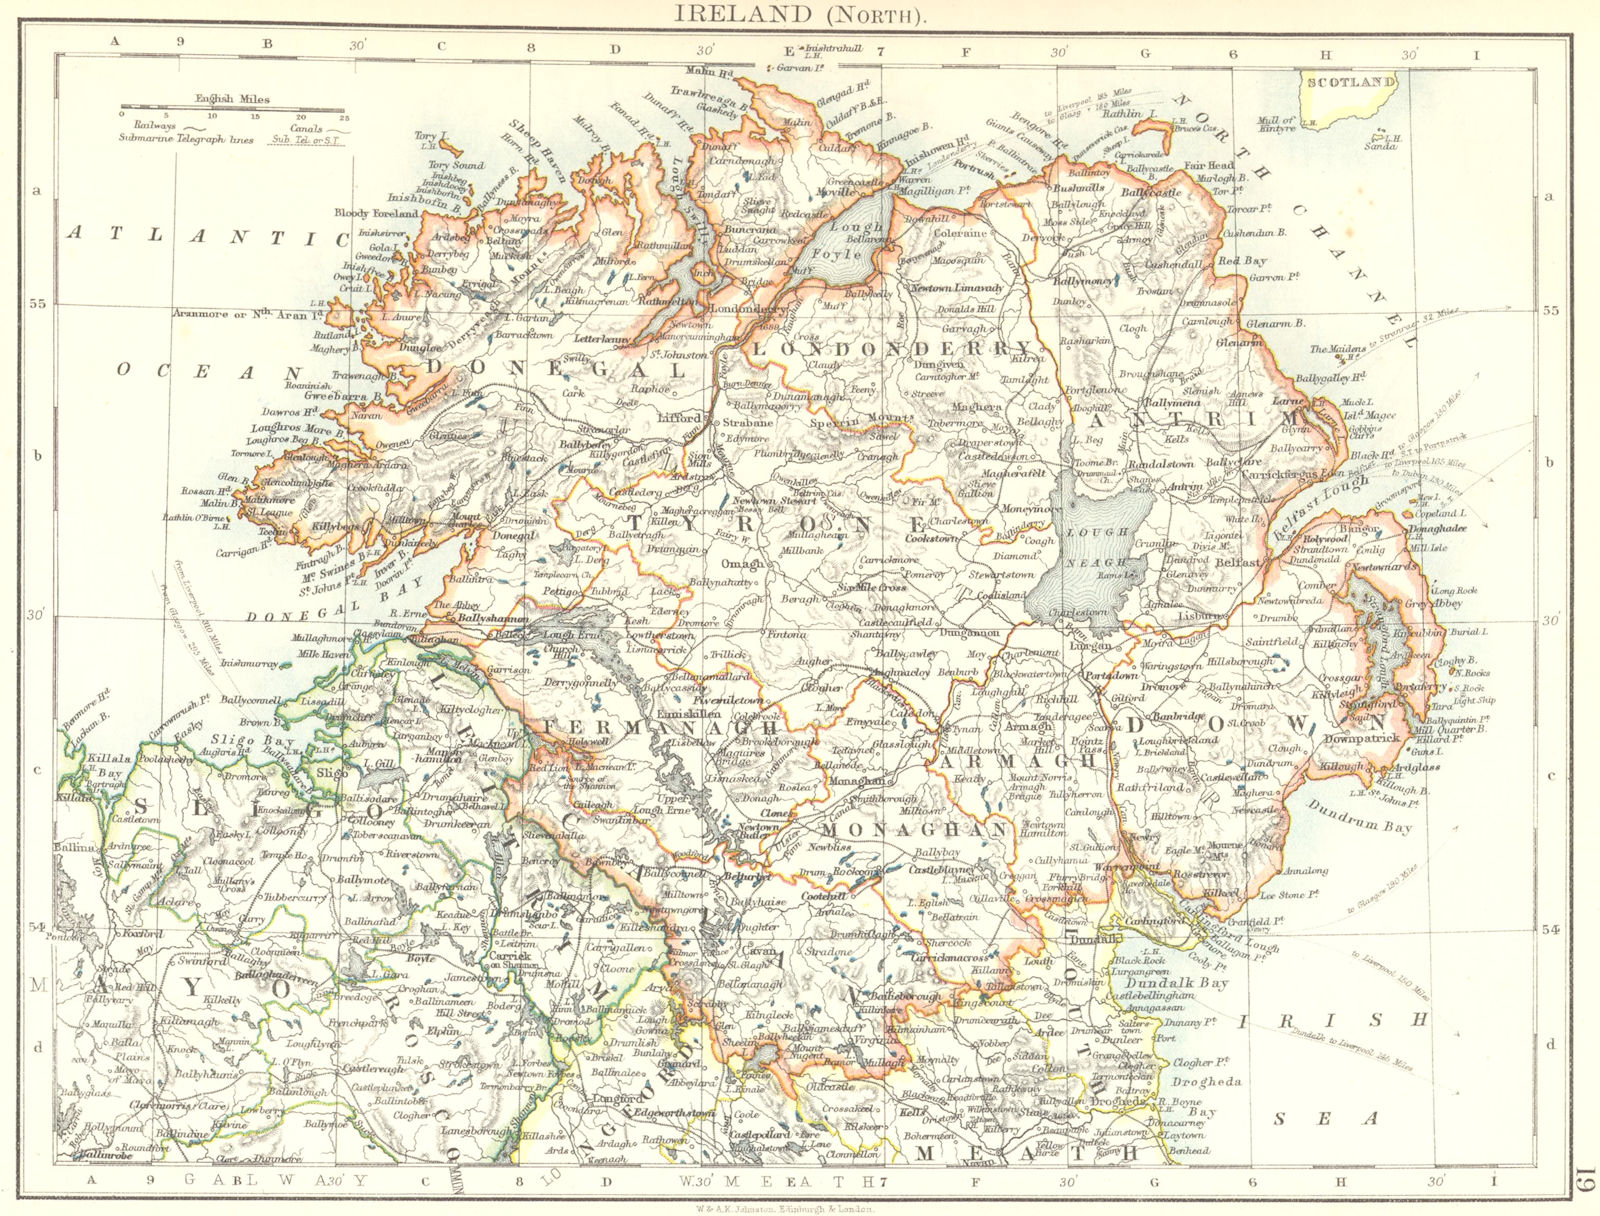 ULSTER. Antrim Down Armagh Cavan Tyrone &c. Northern Ireland. JOHNSTON 1899 map